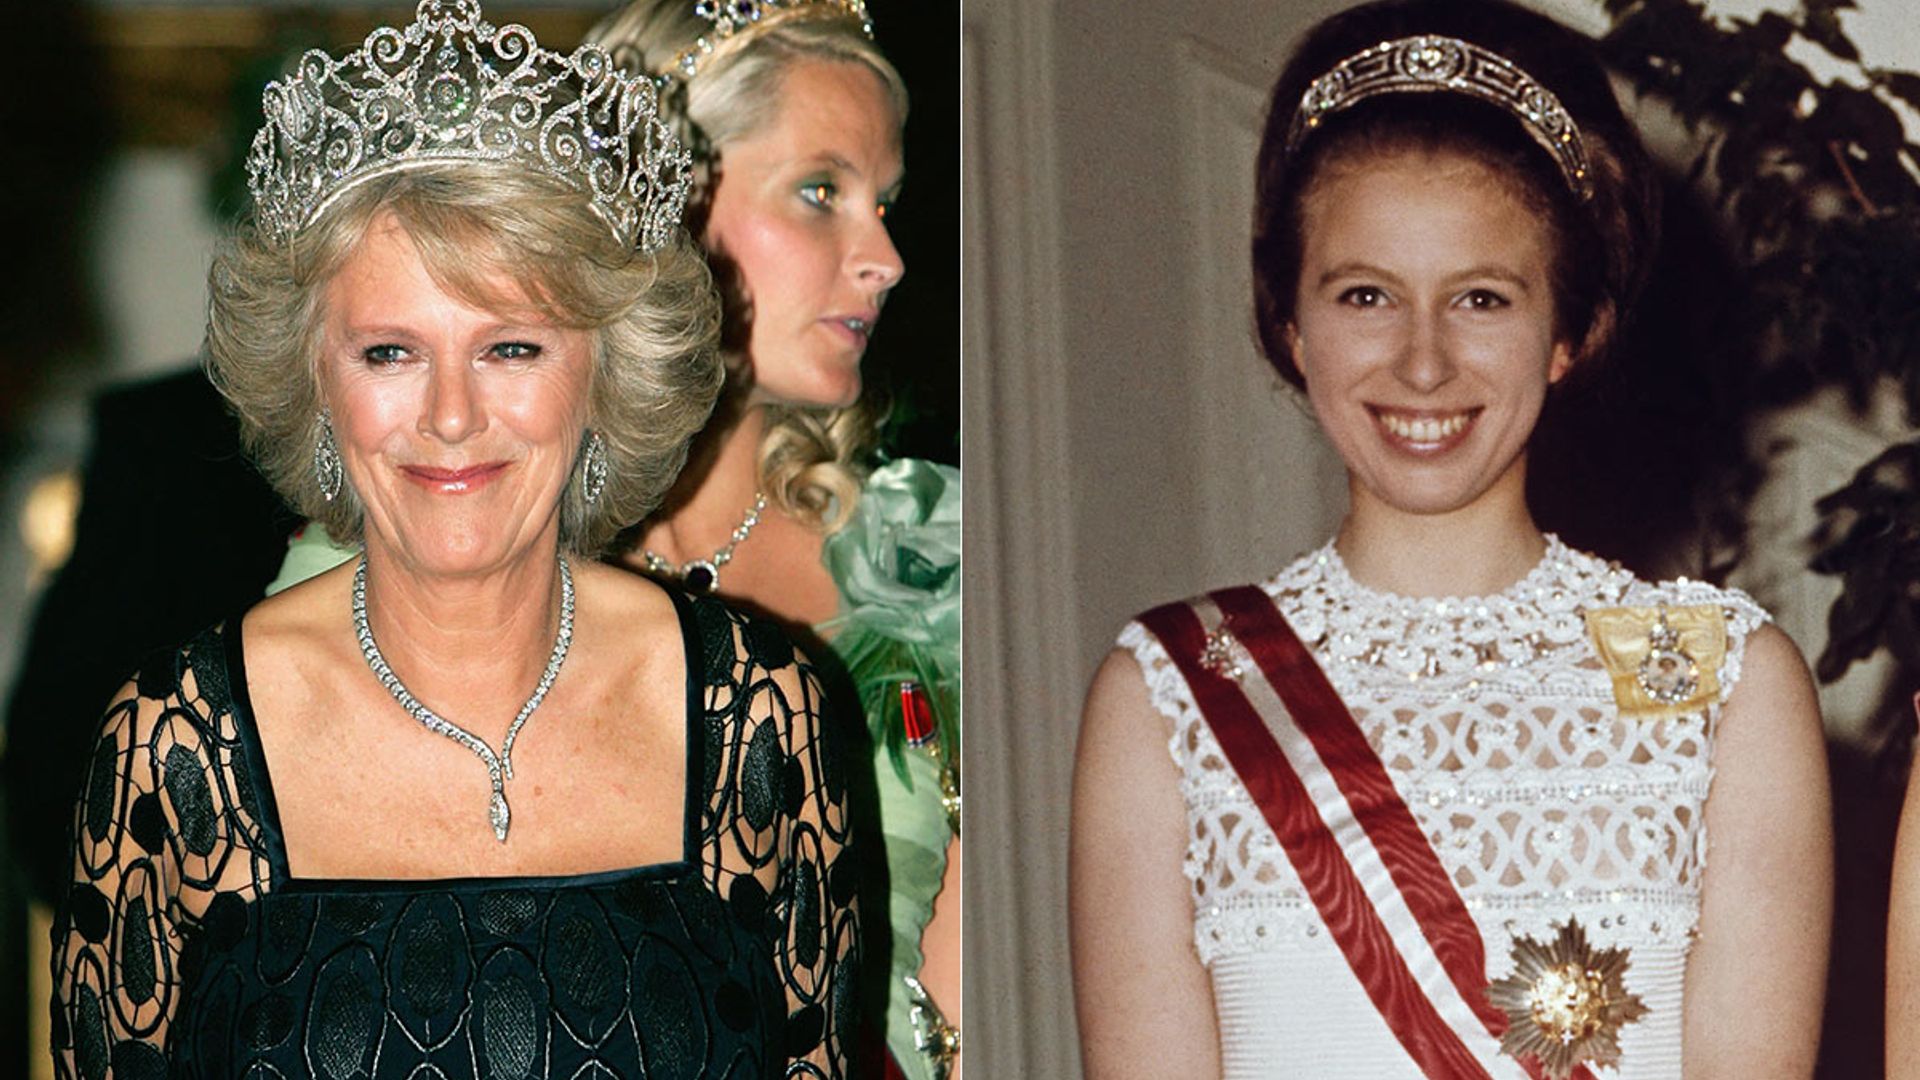 duchess of cornwall and princess anne wearing tiara